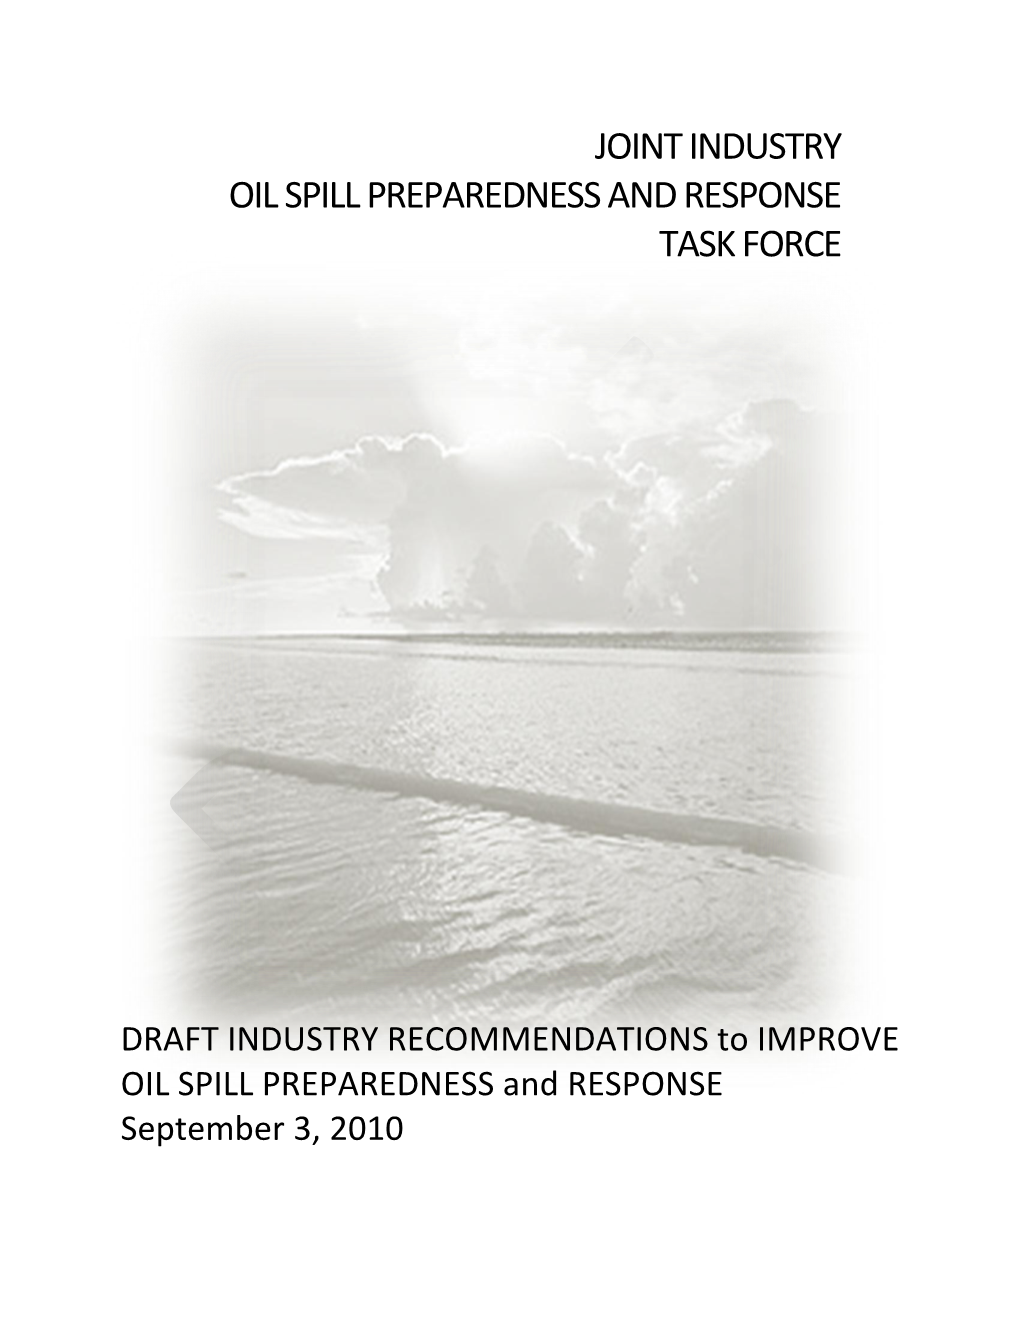 Joint Industry Oil Spill Preparedness and Response Task Force